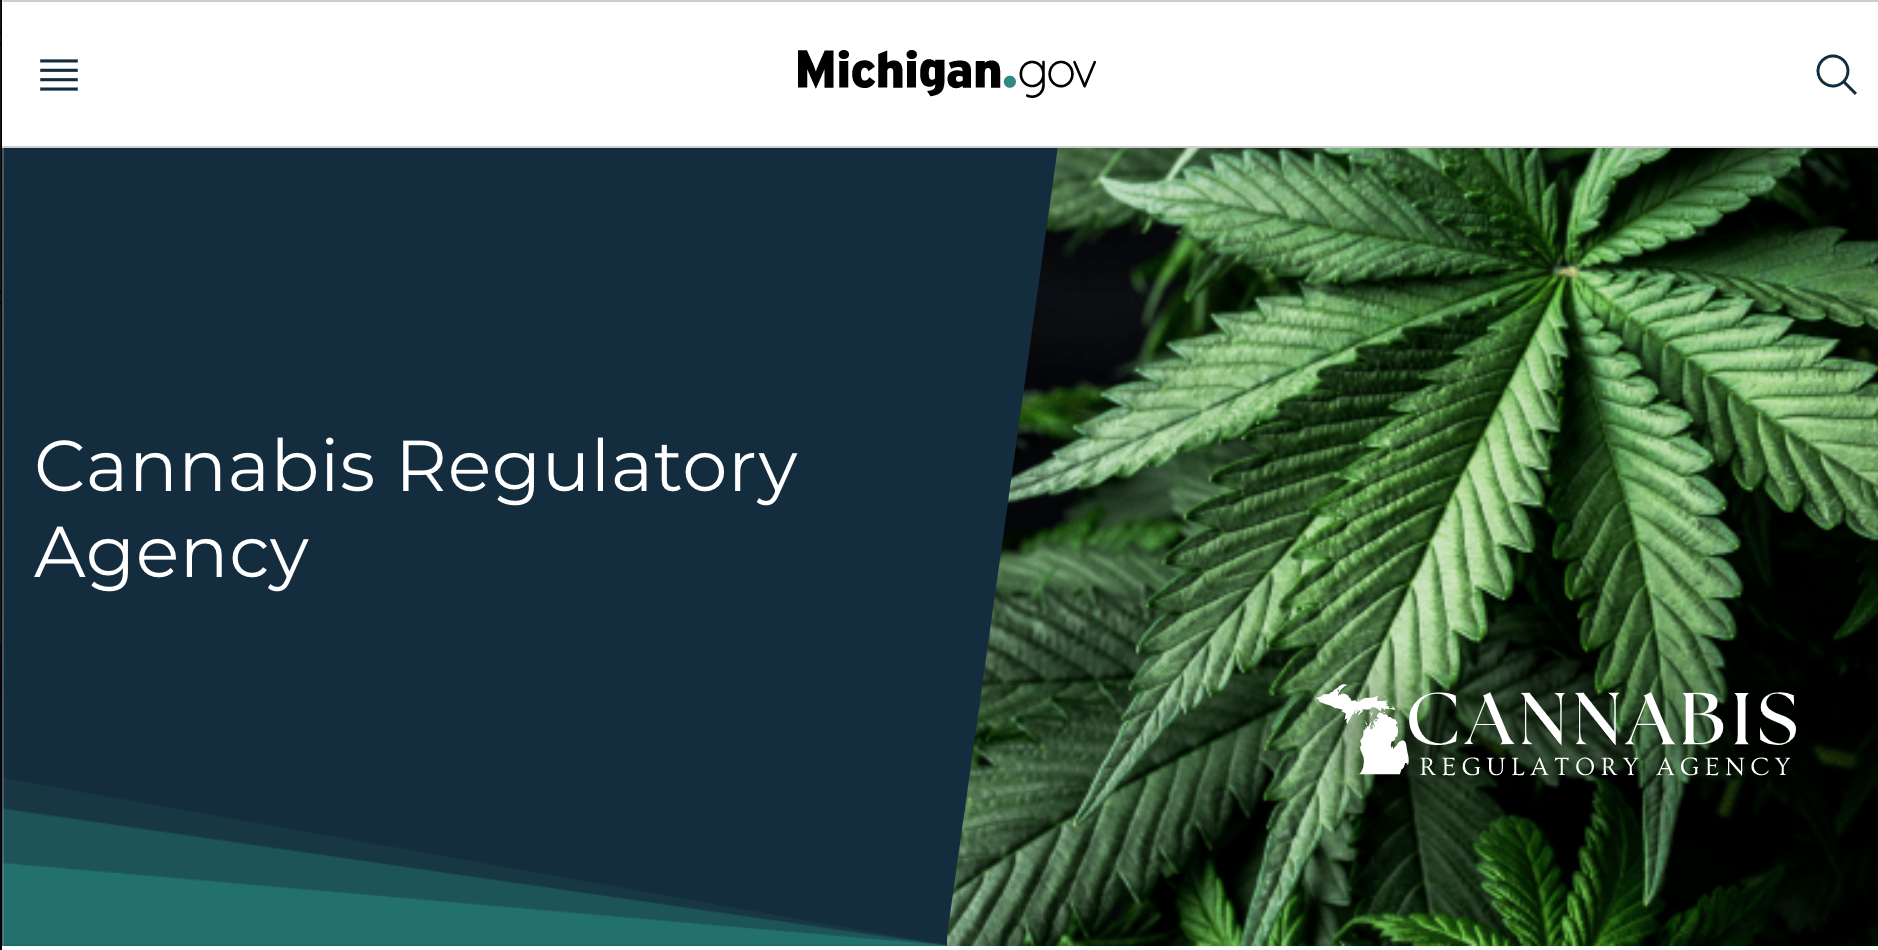 Cannabis Regulatory Agency cover